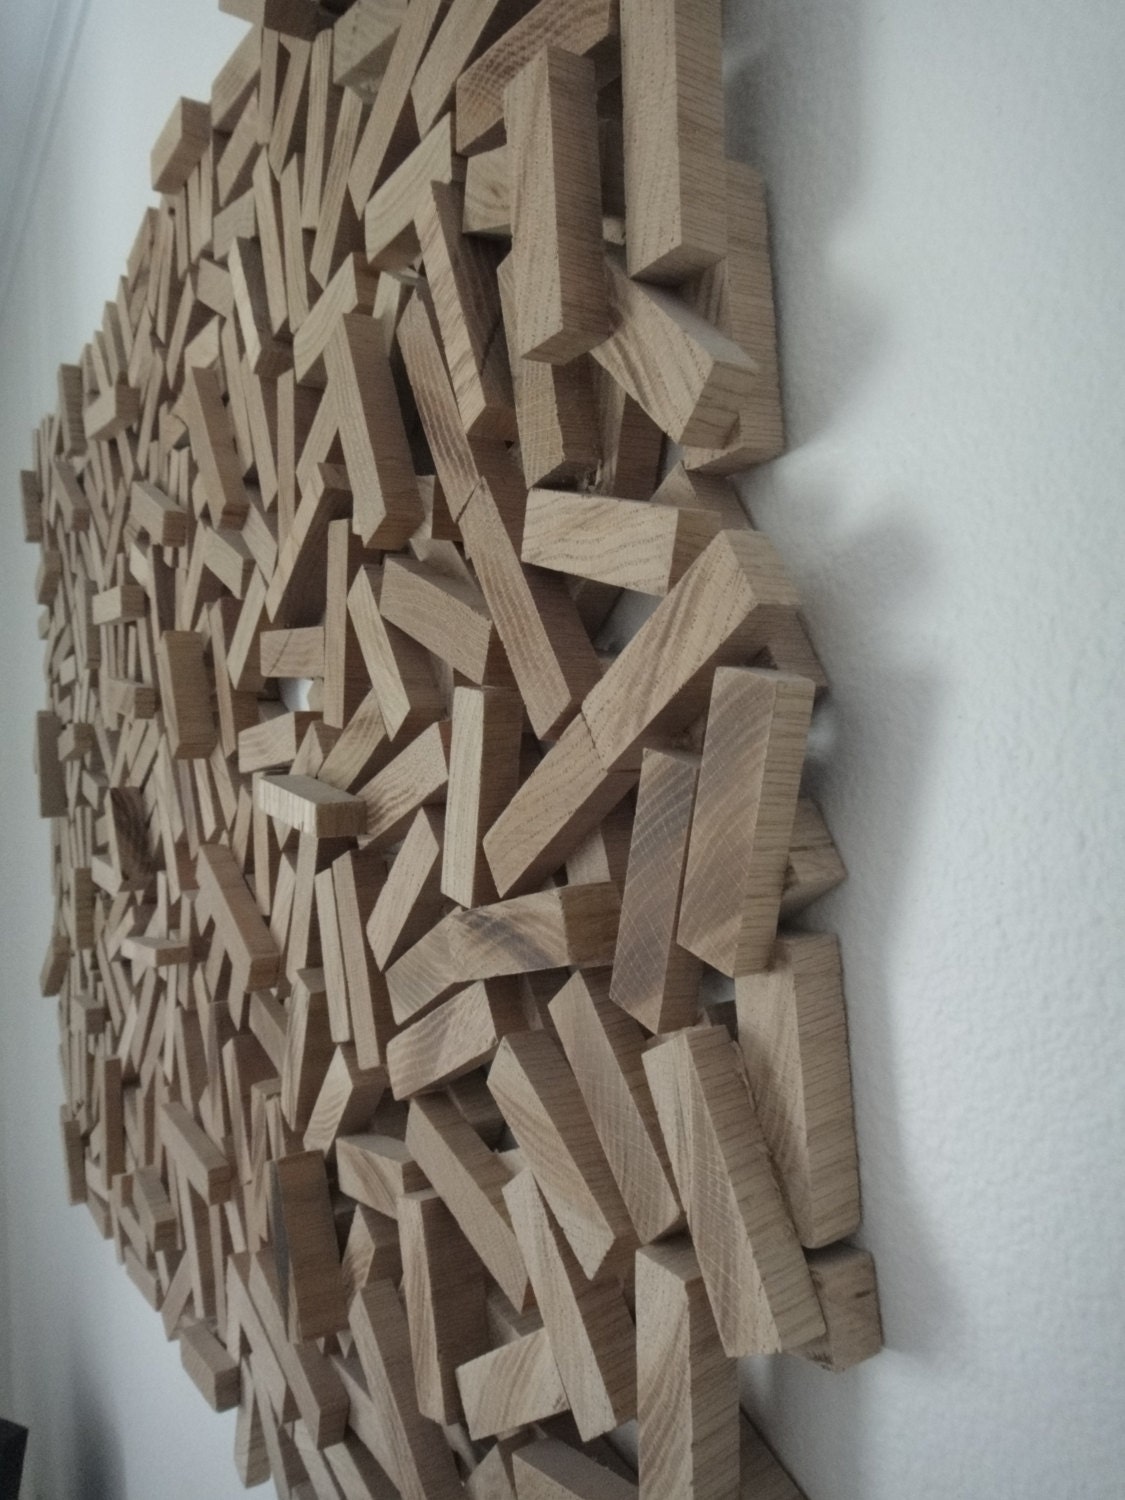 Abstract Wood Sculpture Wall Hanging Wood Wall Art | Etsy